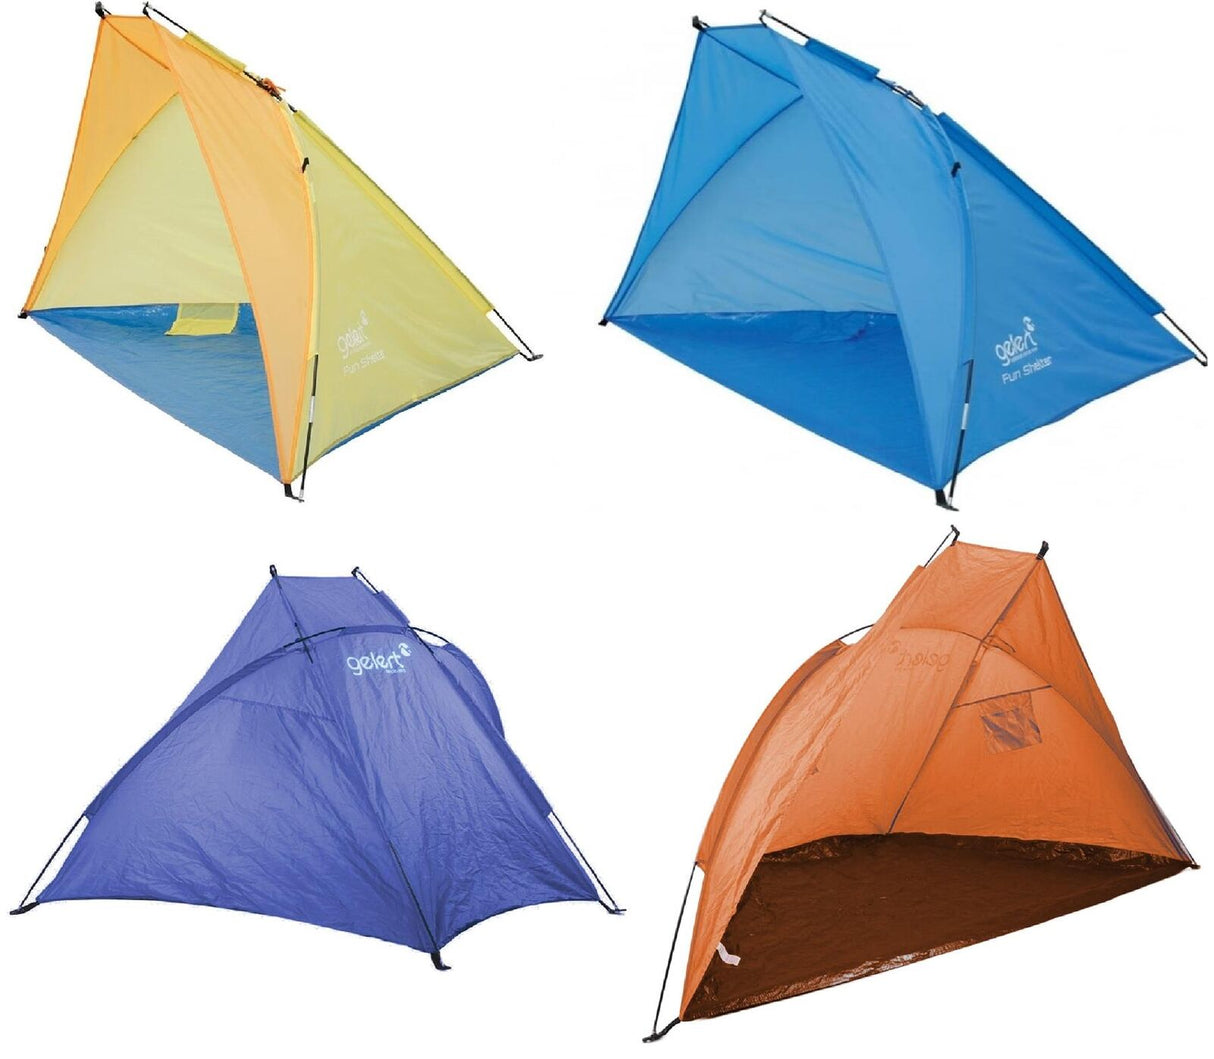 Gelert Fun Shelter Camping Beach Tent - Premium clothing from Gelert - Just $11.99! Shop now at Warwickshire Clothing